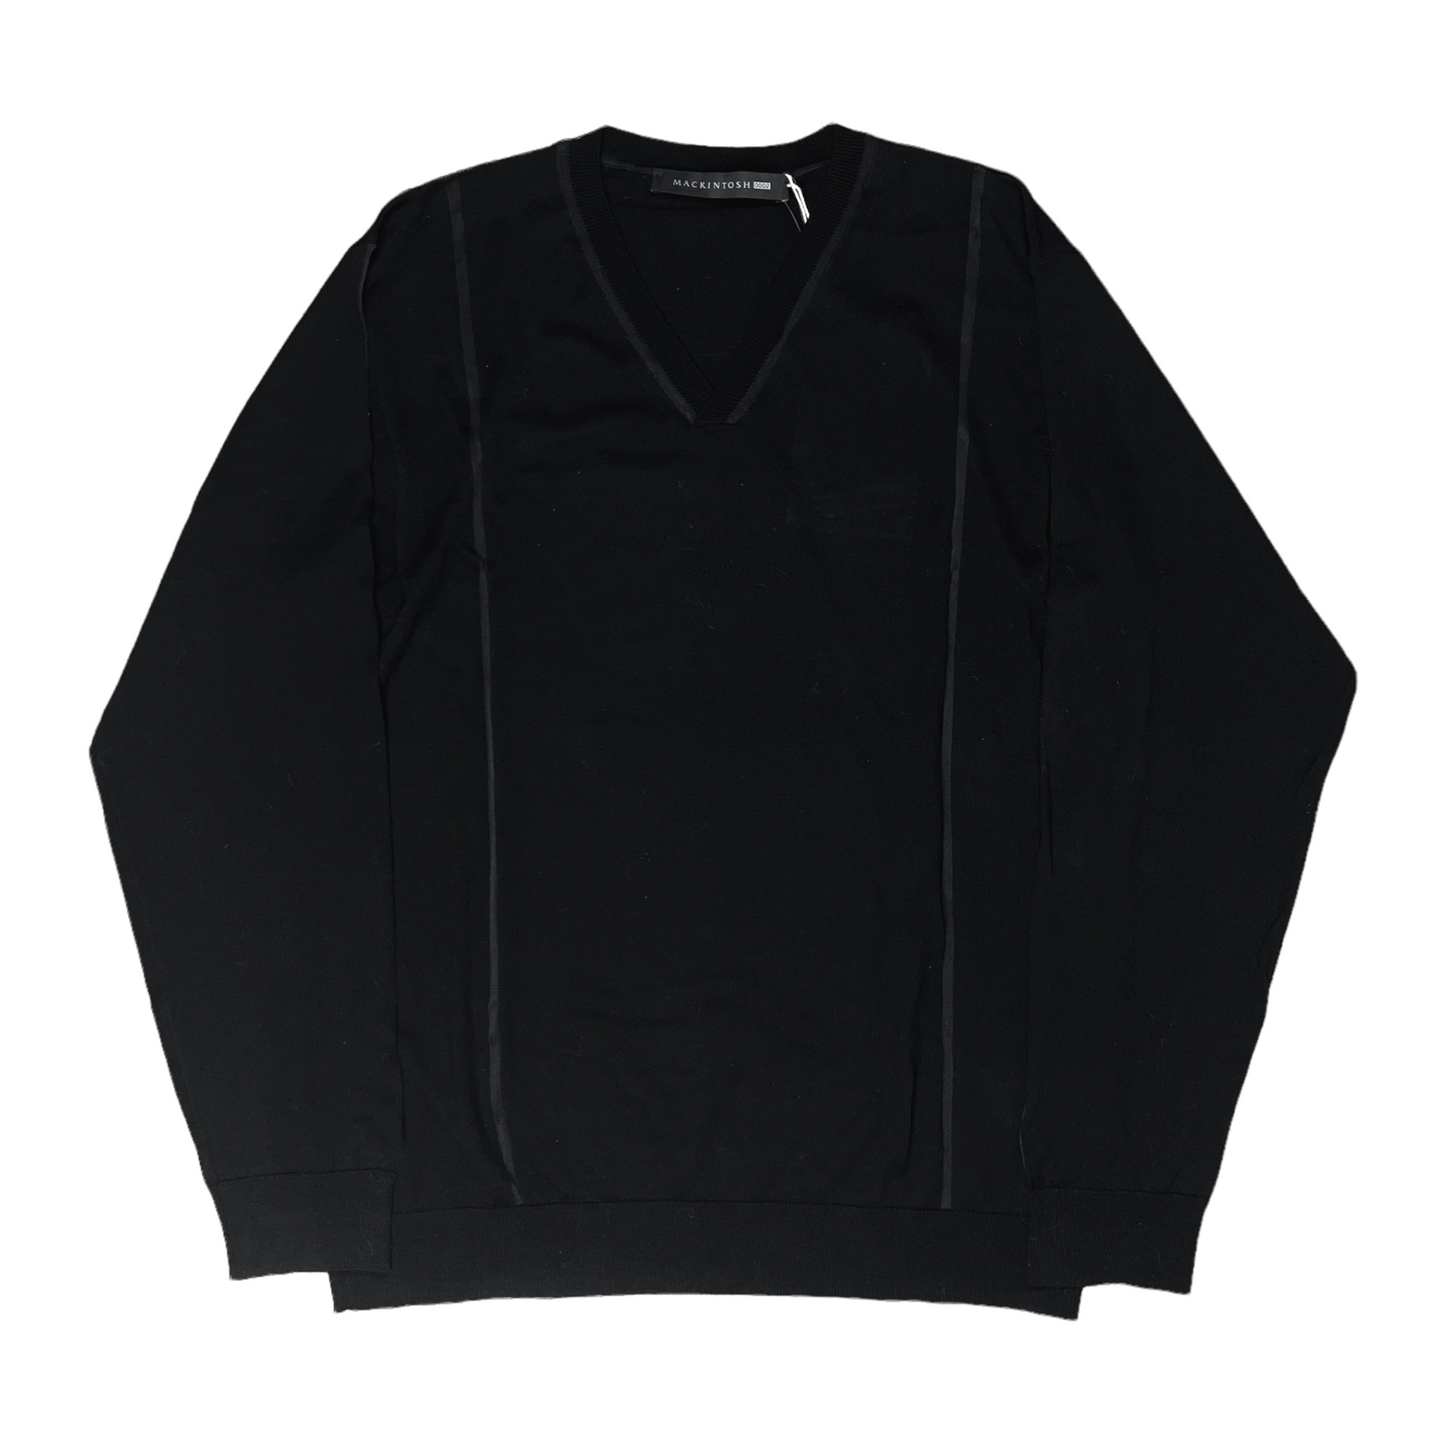 Mackintosh 0002 V-Neck Wool Sweater - SS18